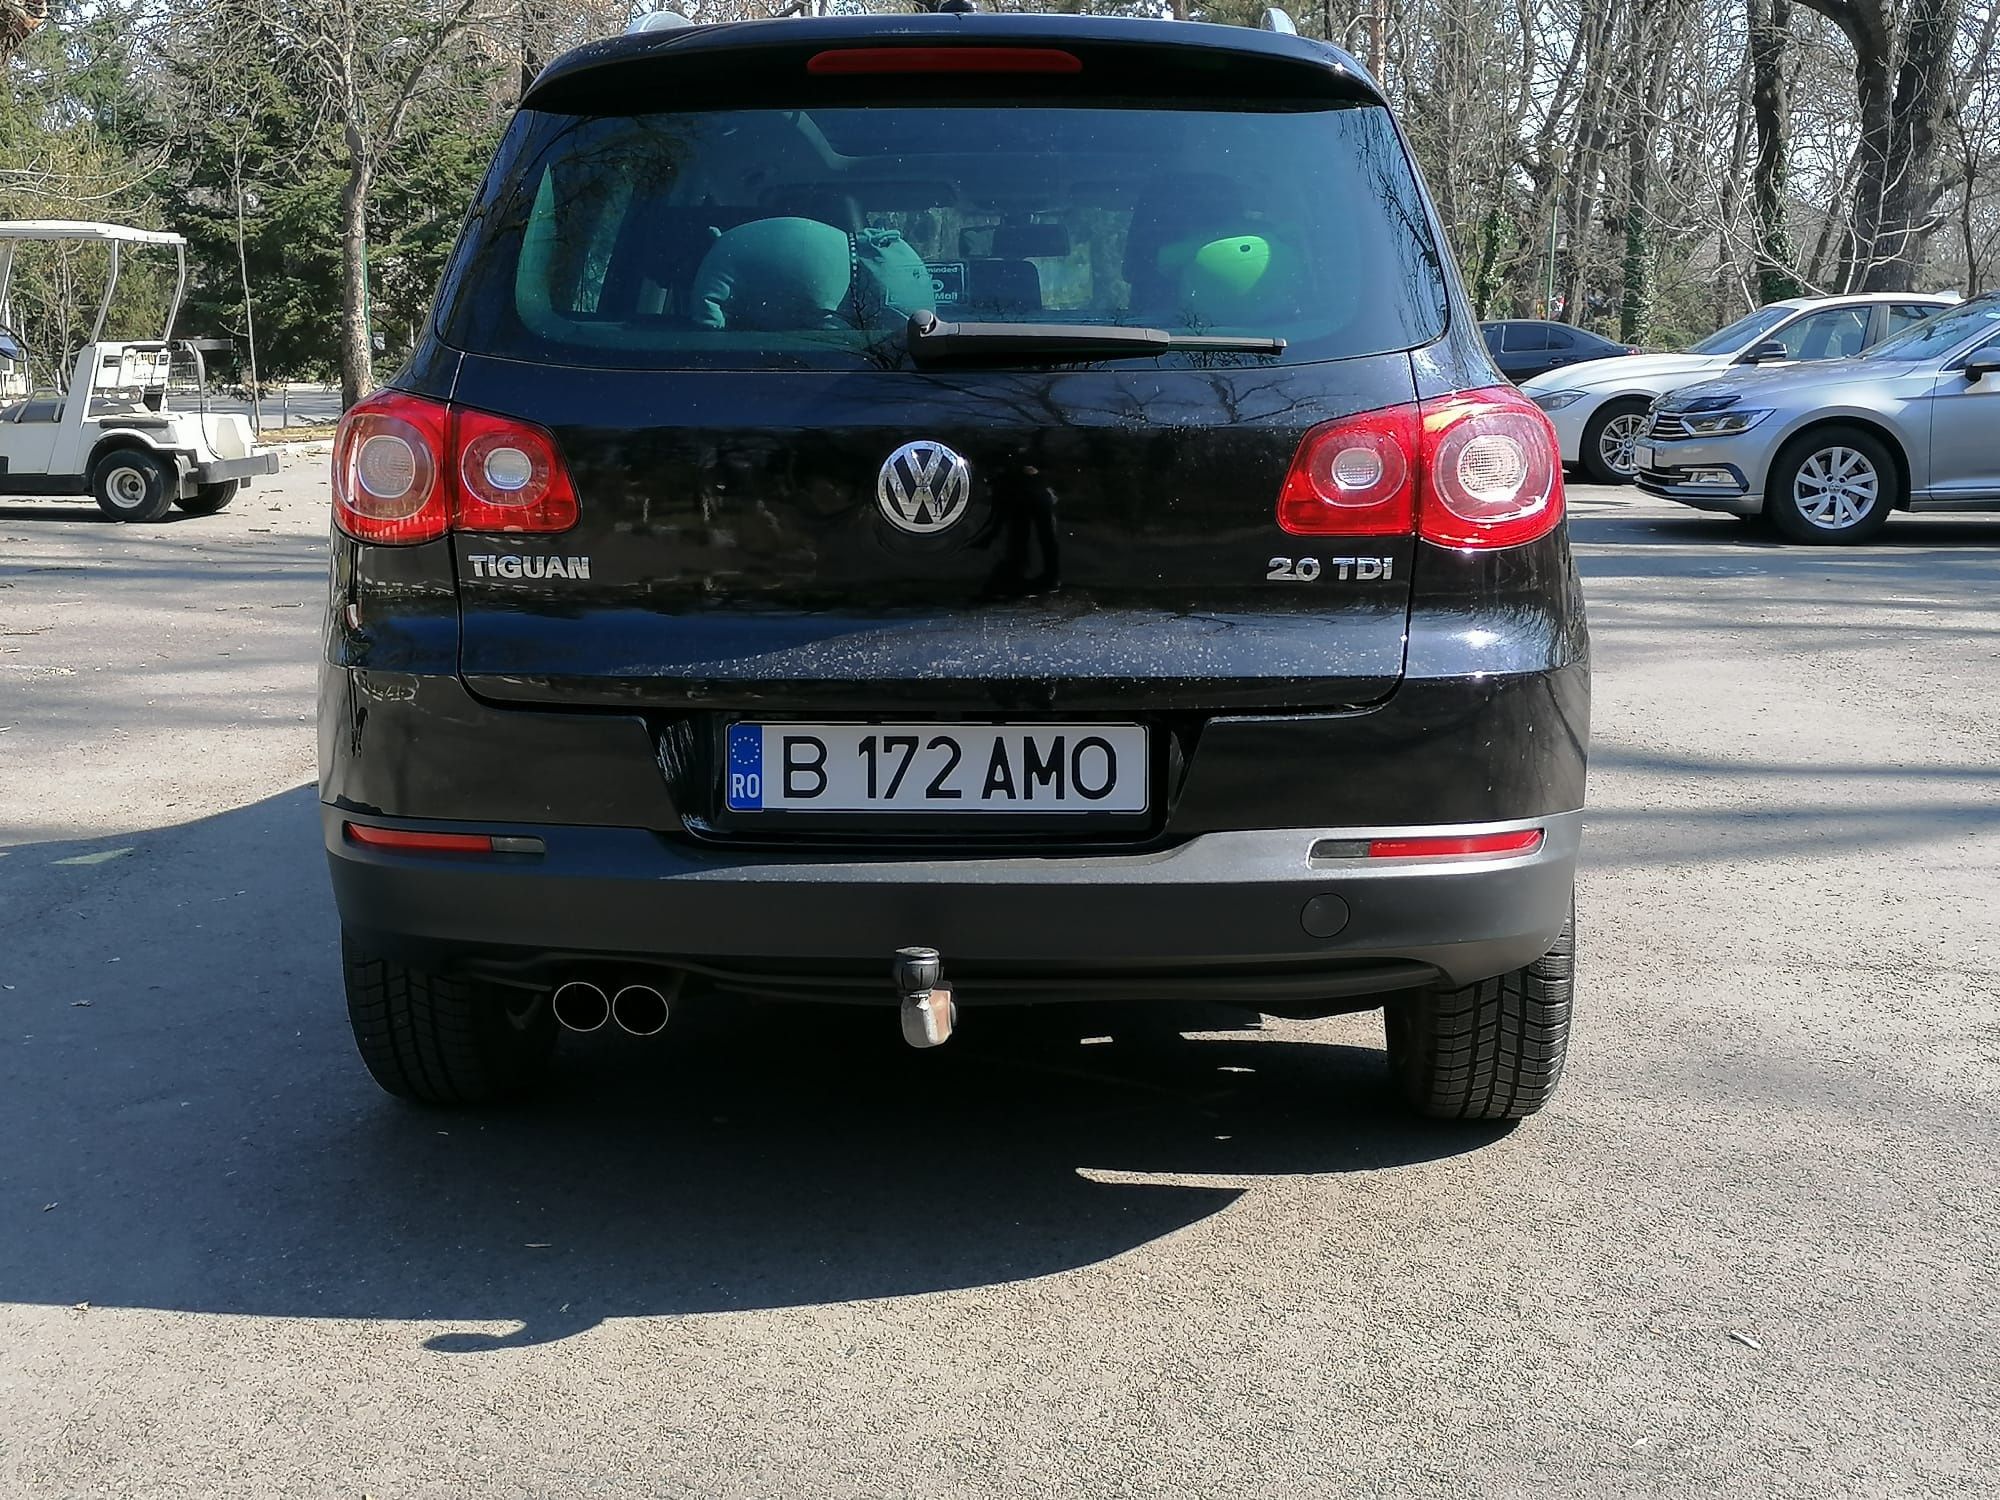 Volkswagen Tiguan4×4 4 motion 2.0 TDI 2009